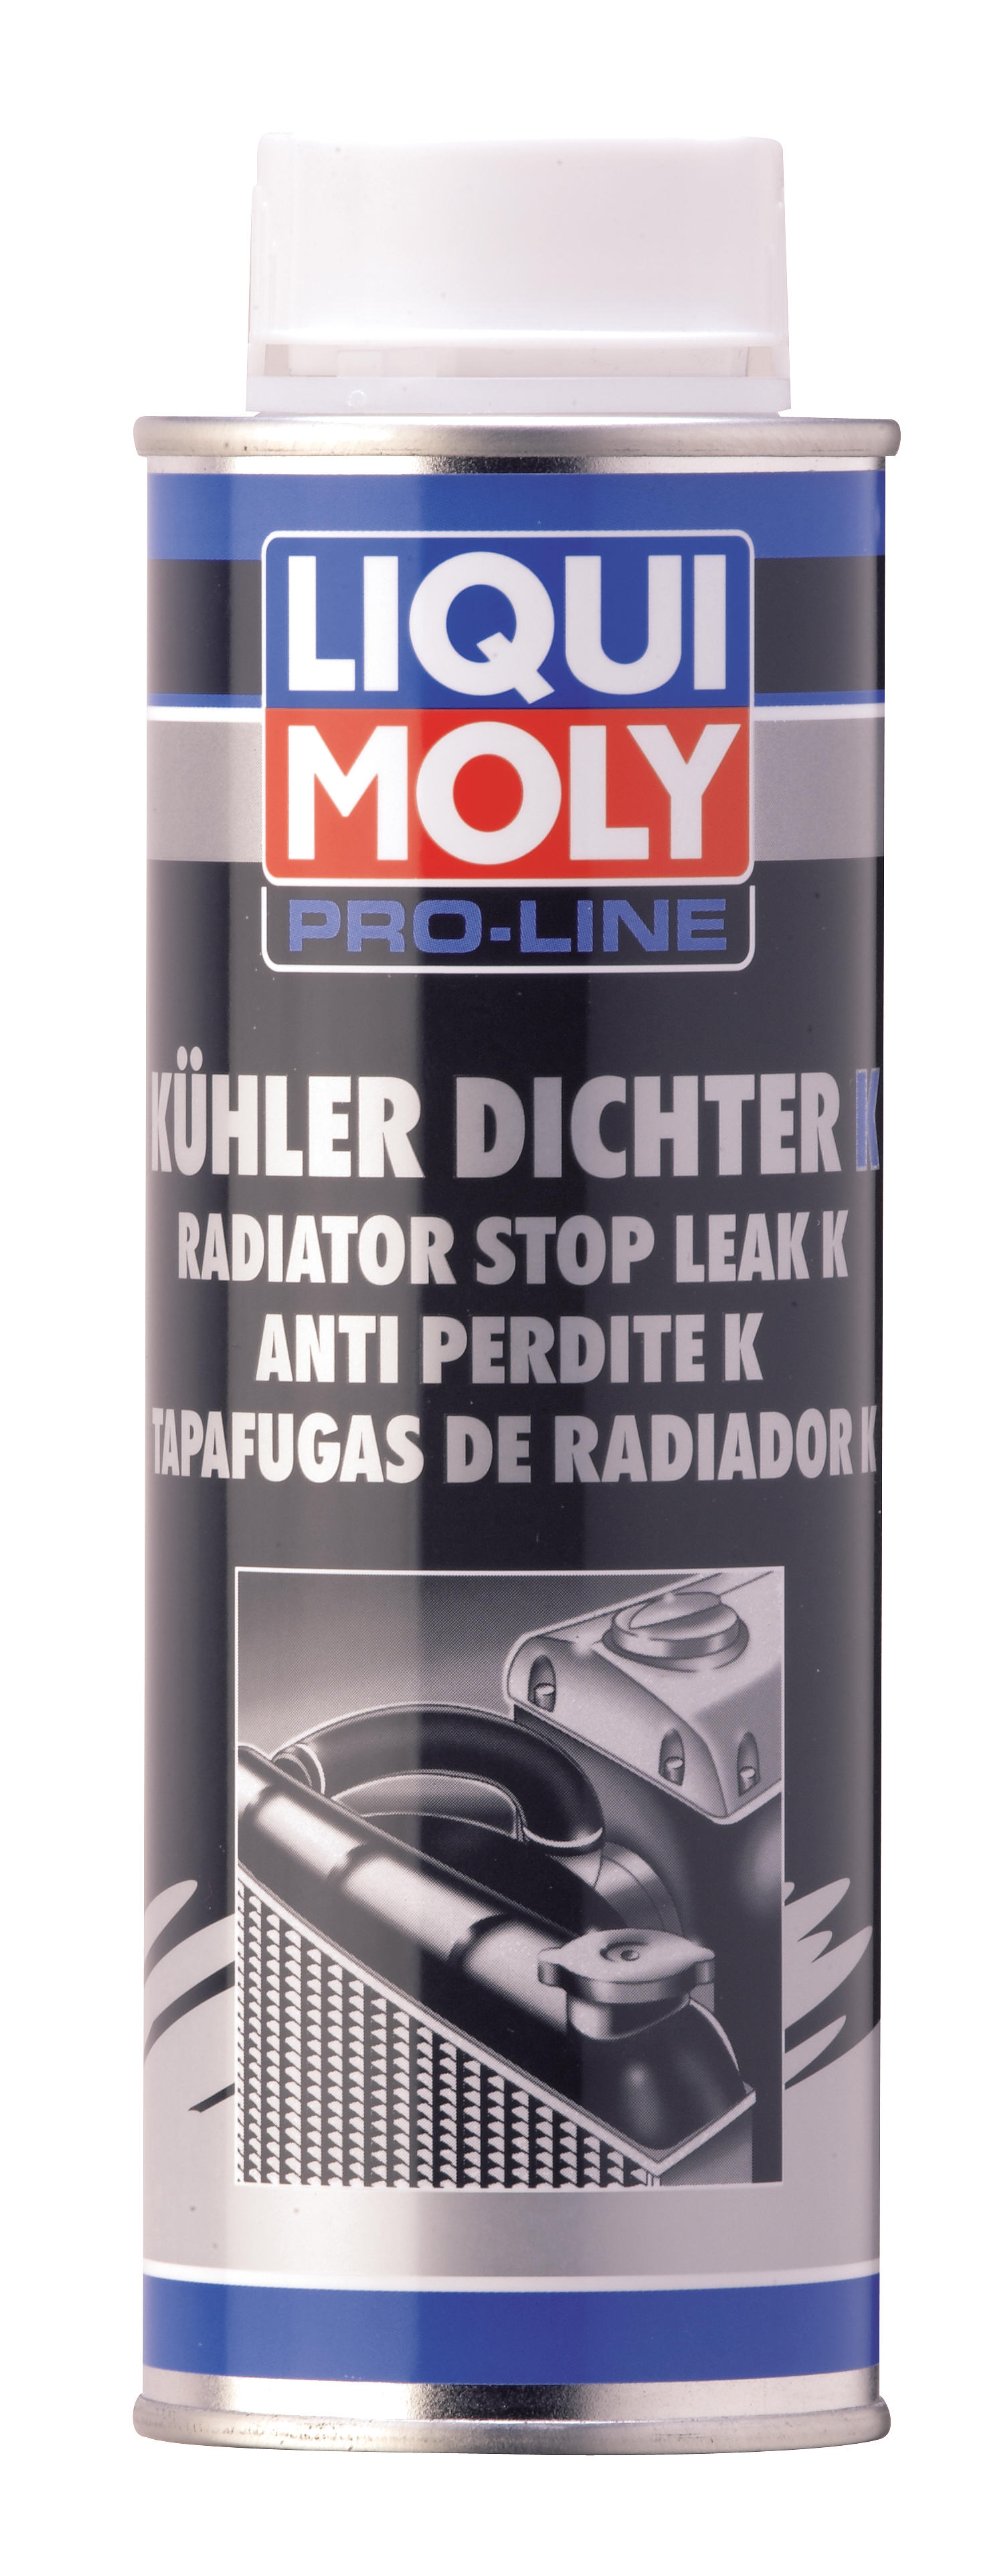 LIQUI MOLY Pro-Line Kühlerdichter K | 250 ml | Kühleradditiv | Art.-Nr.: 5178 von Liqui Moly